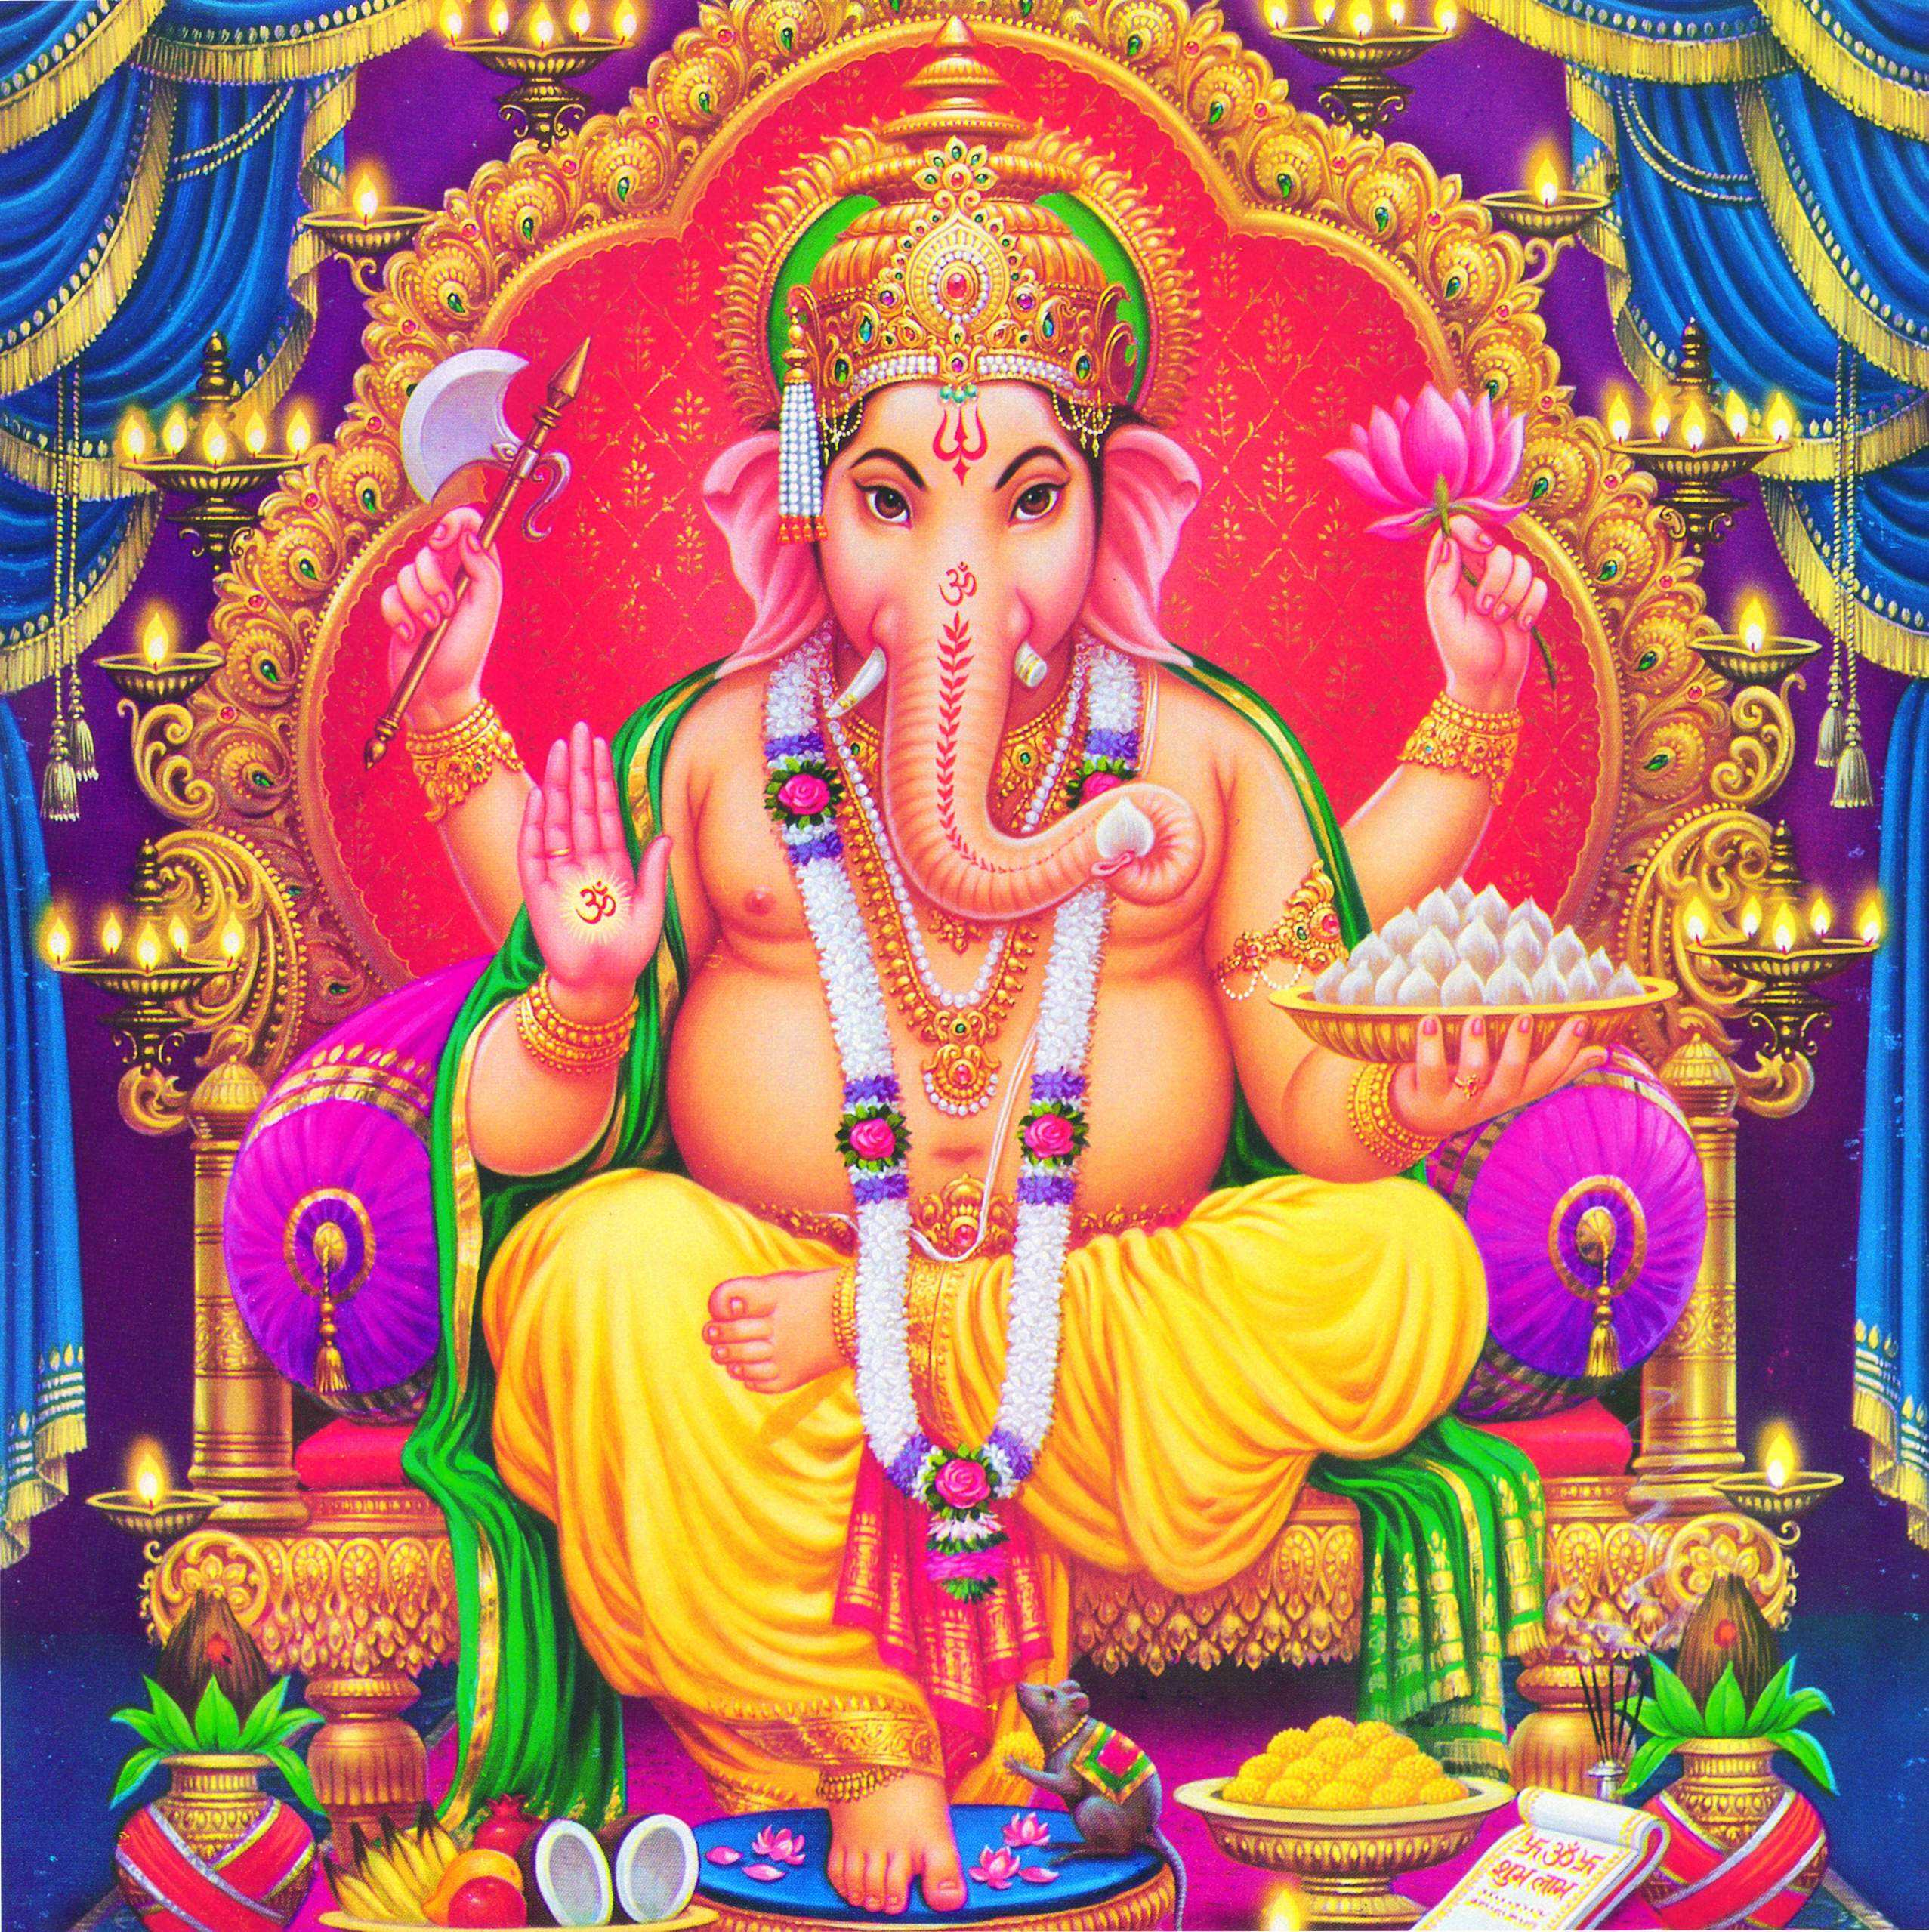 Free Ganesh Images, Download Free Ganesh Images png images ...